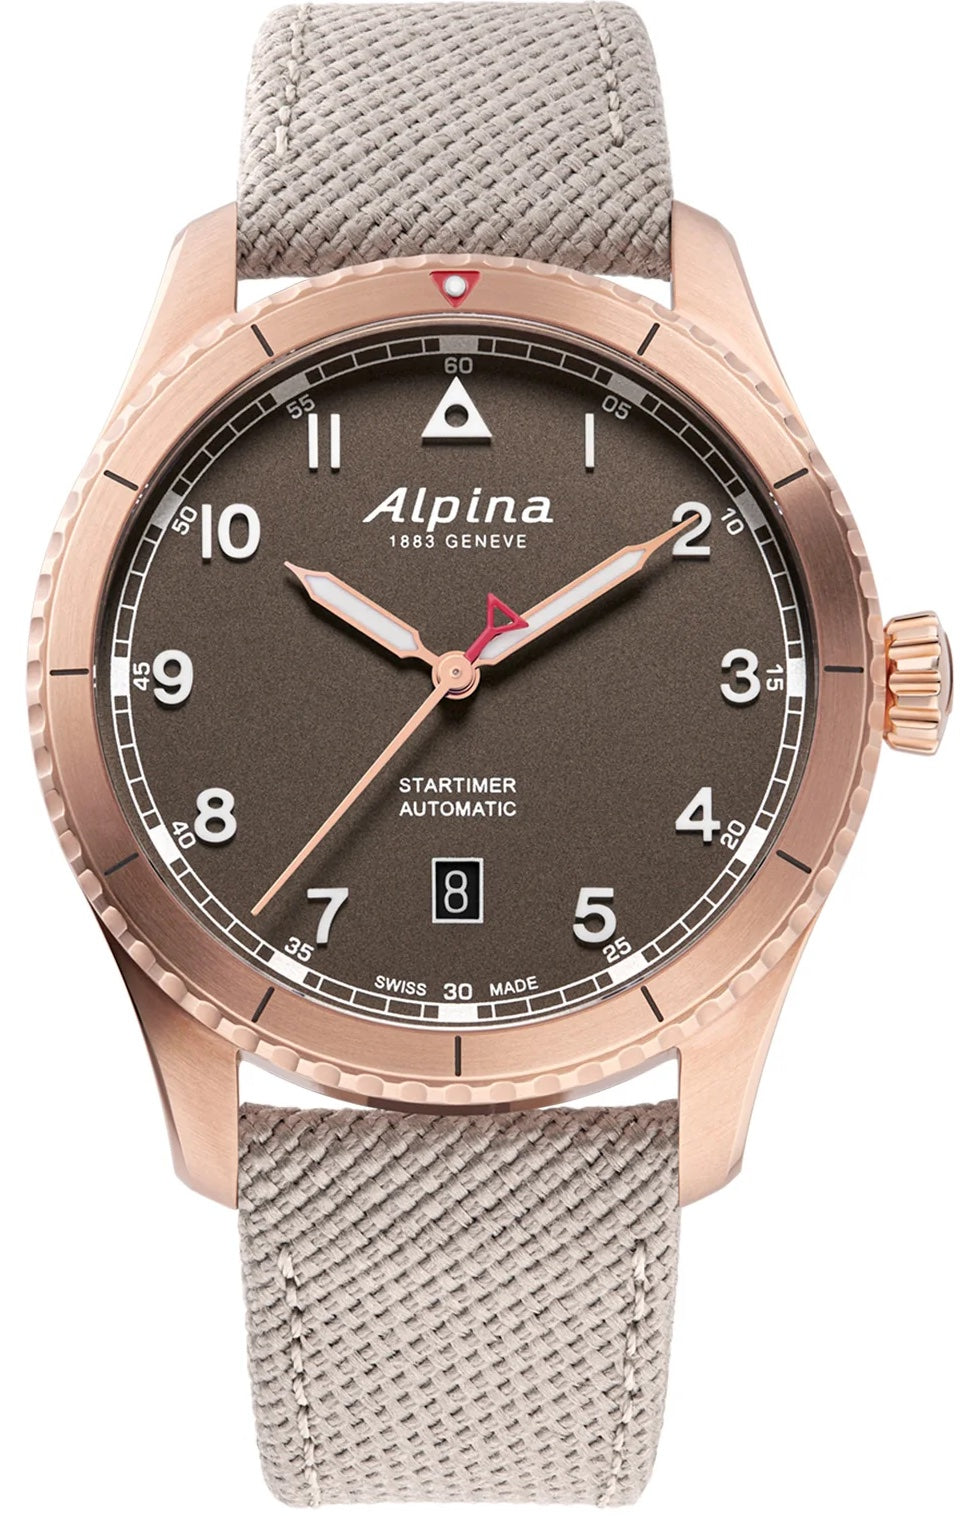 Photos - Wrist Watch Alpina Watch Startimer Pilot Automatic ALP-378 